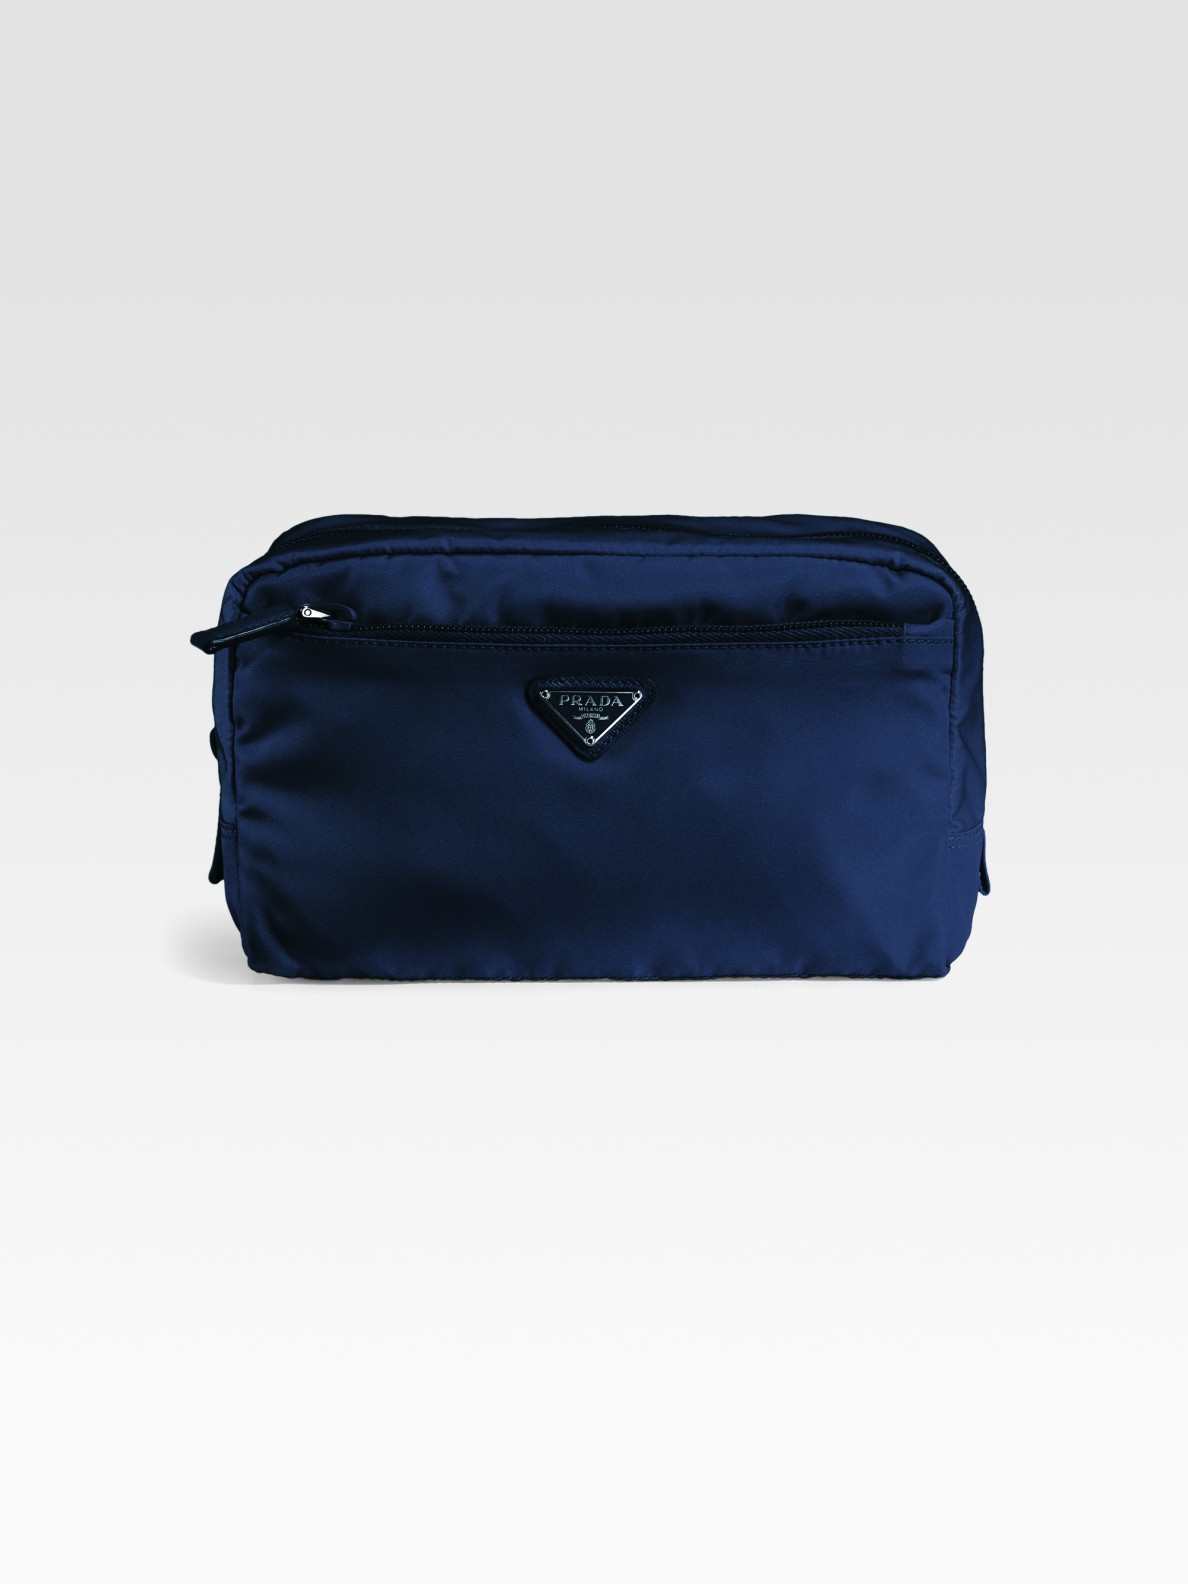 Prada Large Nylon Cosmetic Bag in Blue - Lyst